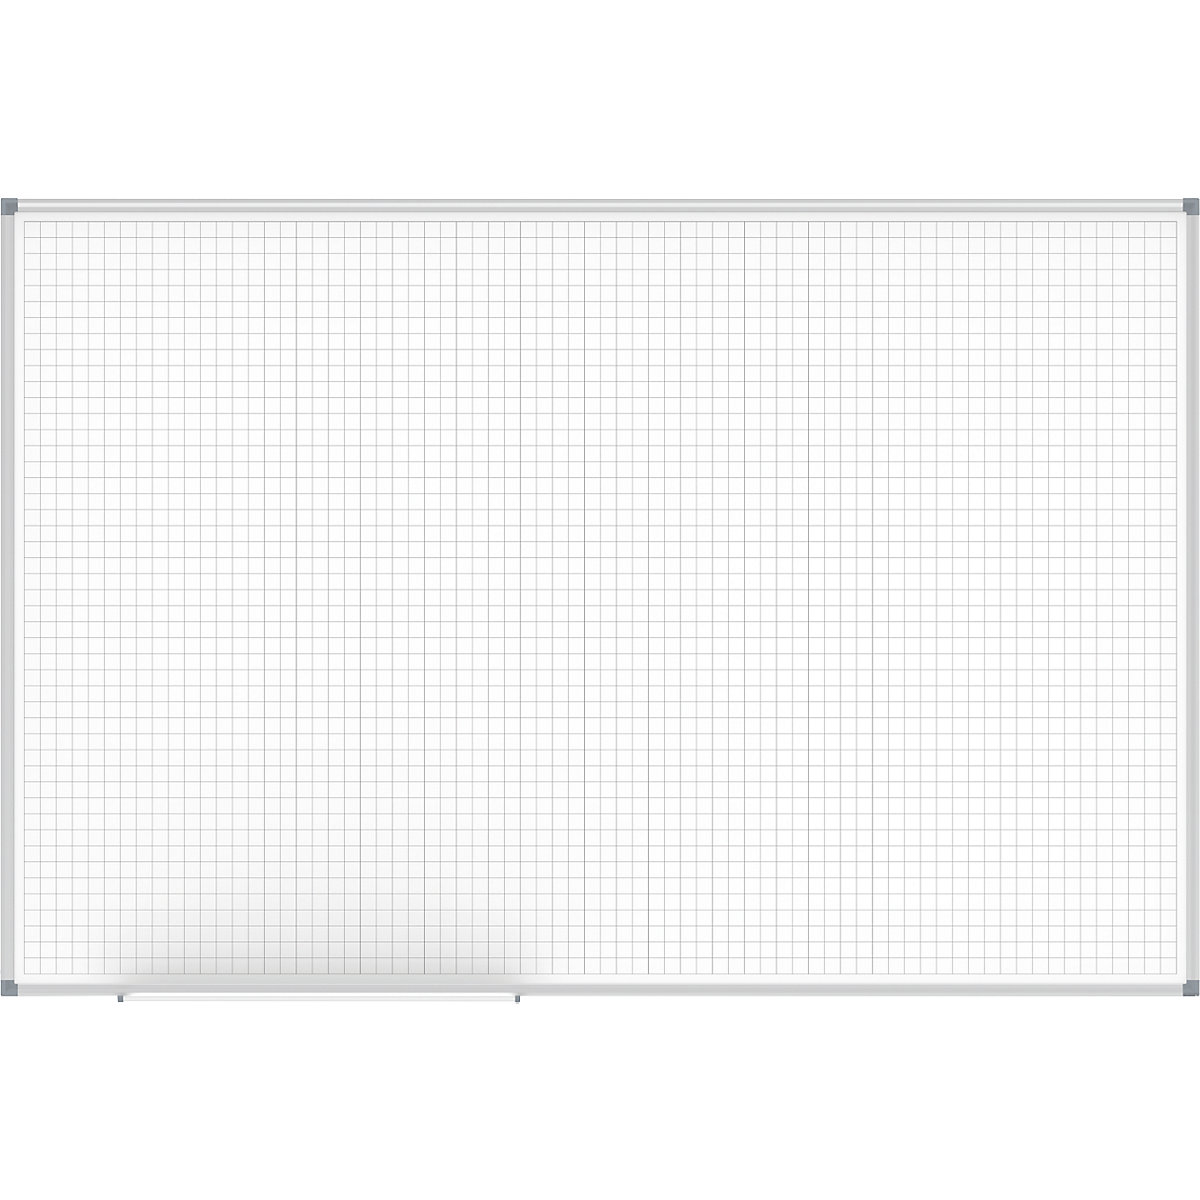 Tablero reticulado MAULstandard, blanco – MAUL, retícula de 20 x 20 mm, A x H 1500 x 1000 mm-2